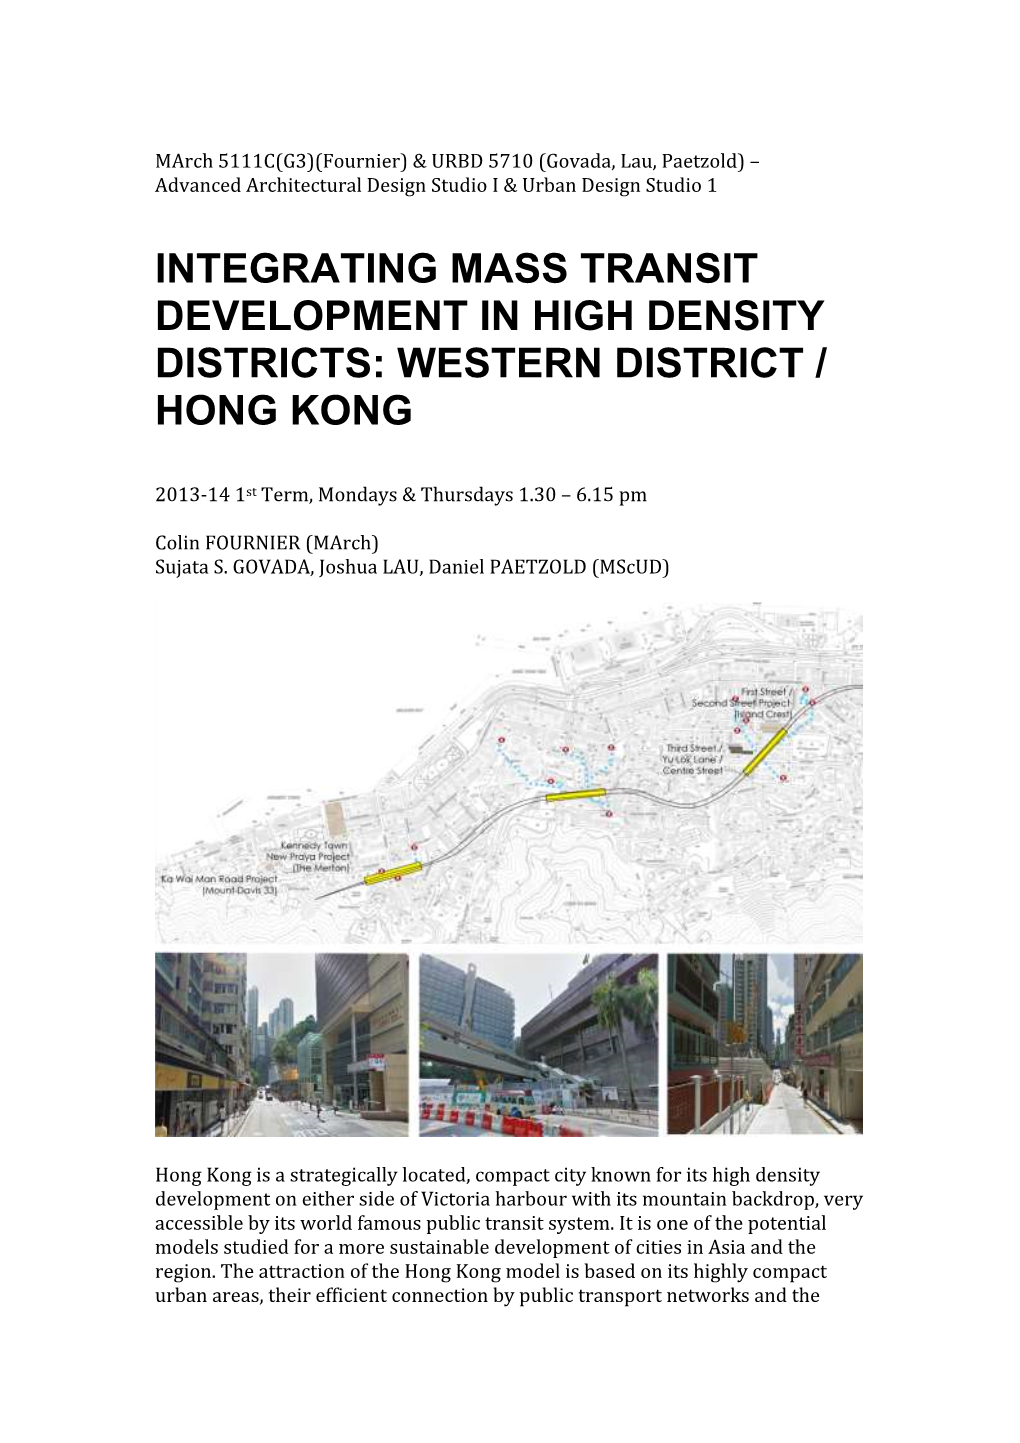 Integrating Mass Transit Development in High Density Districts: Western District / Hong Kong